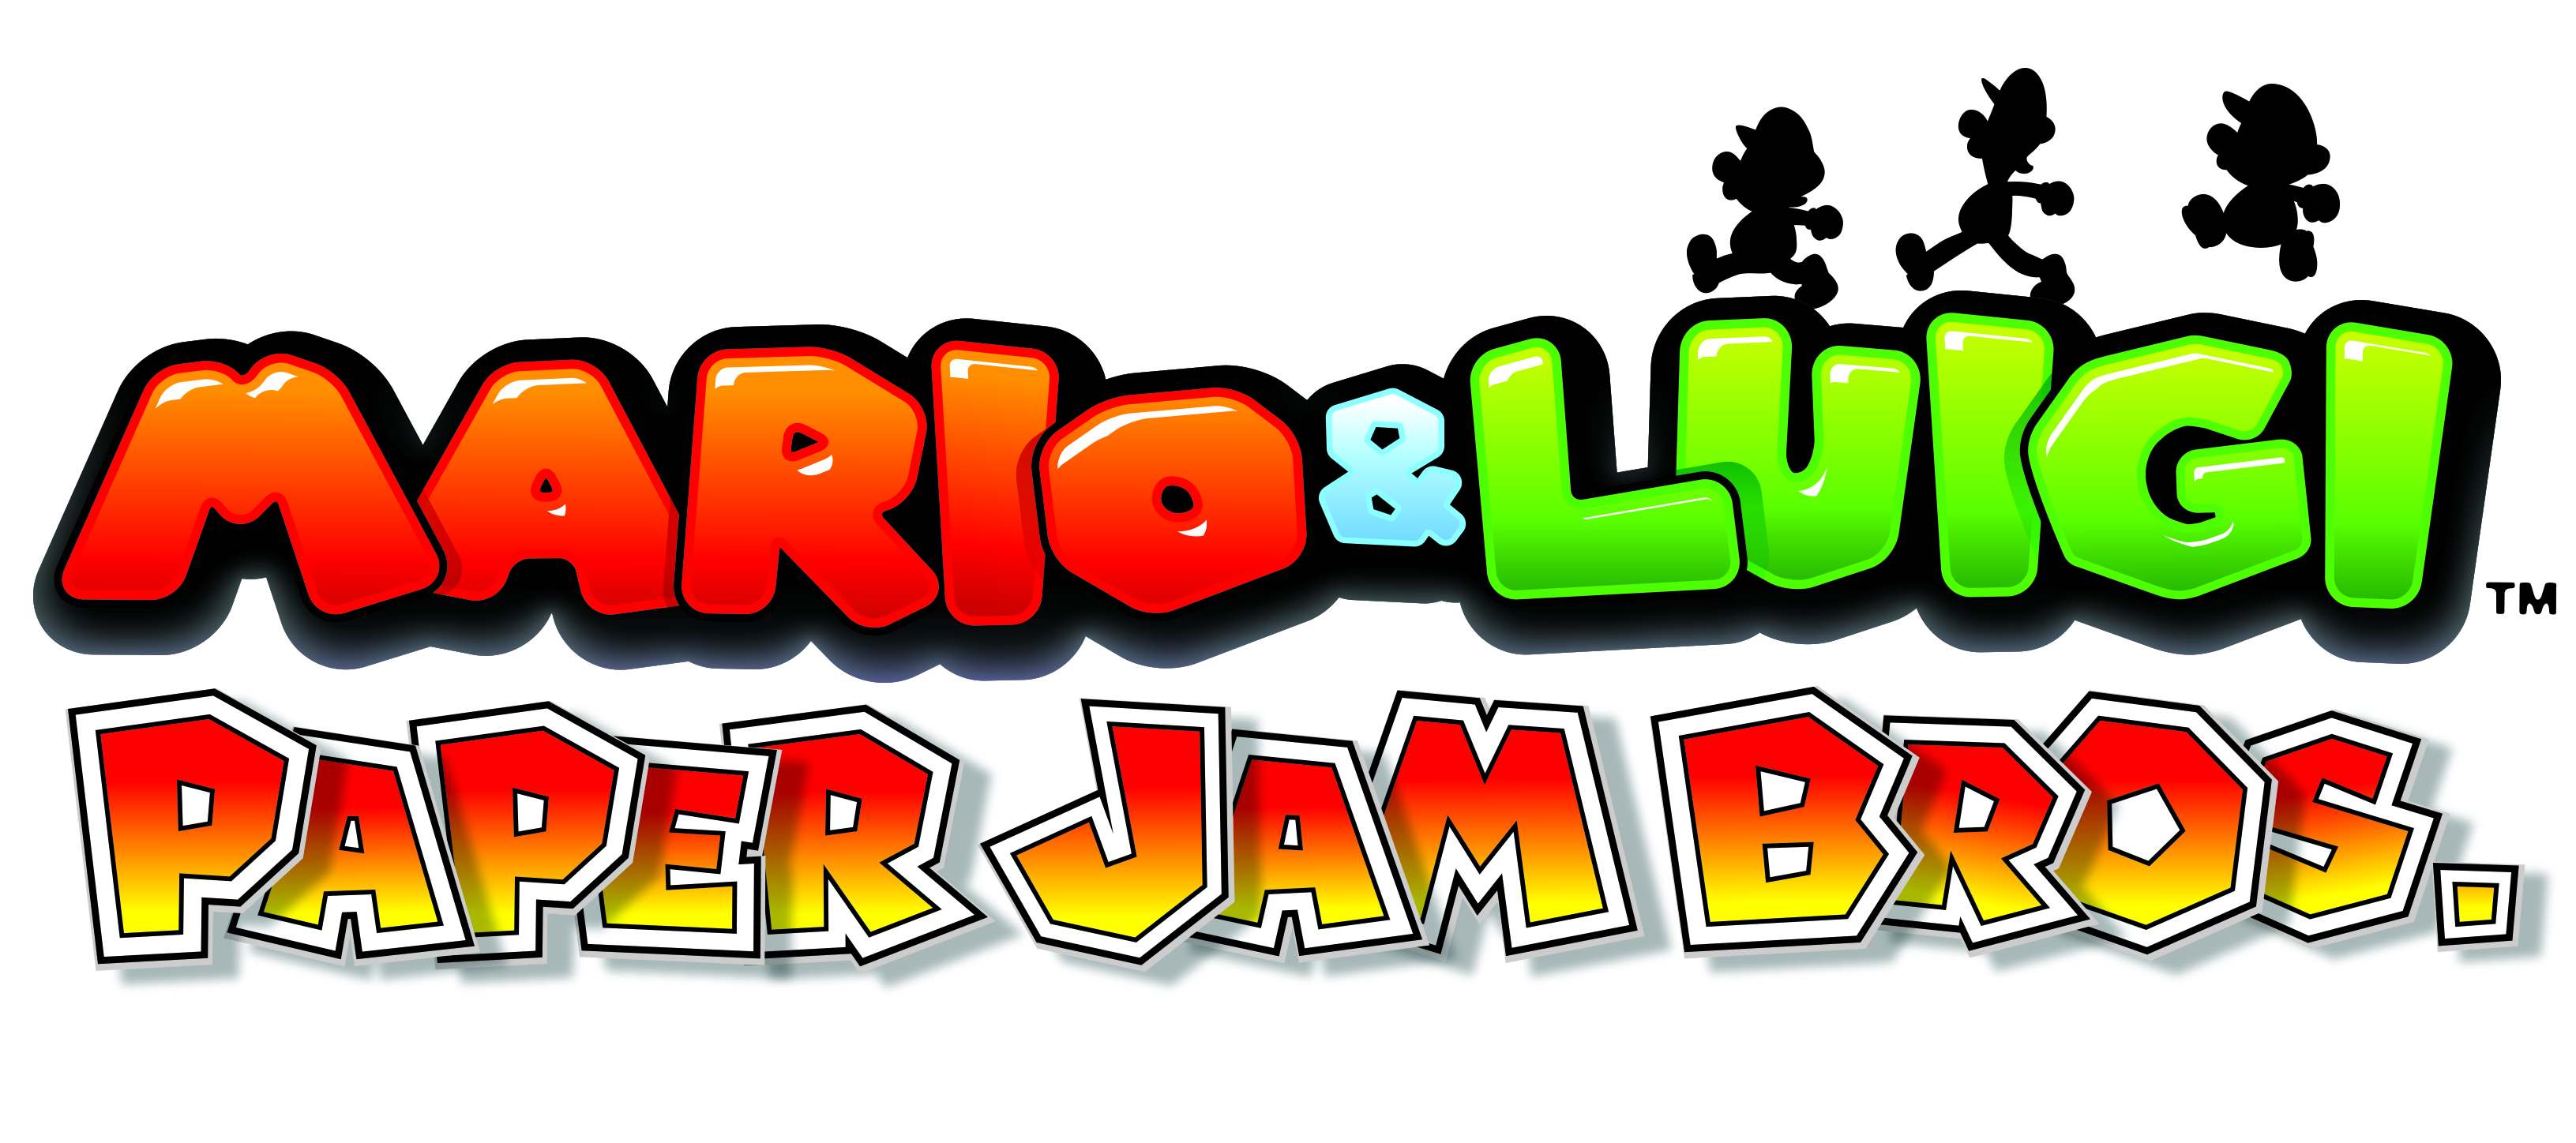 Nintendo presenta Mario & Luigi: Paper Jam Bros.